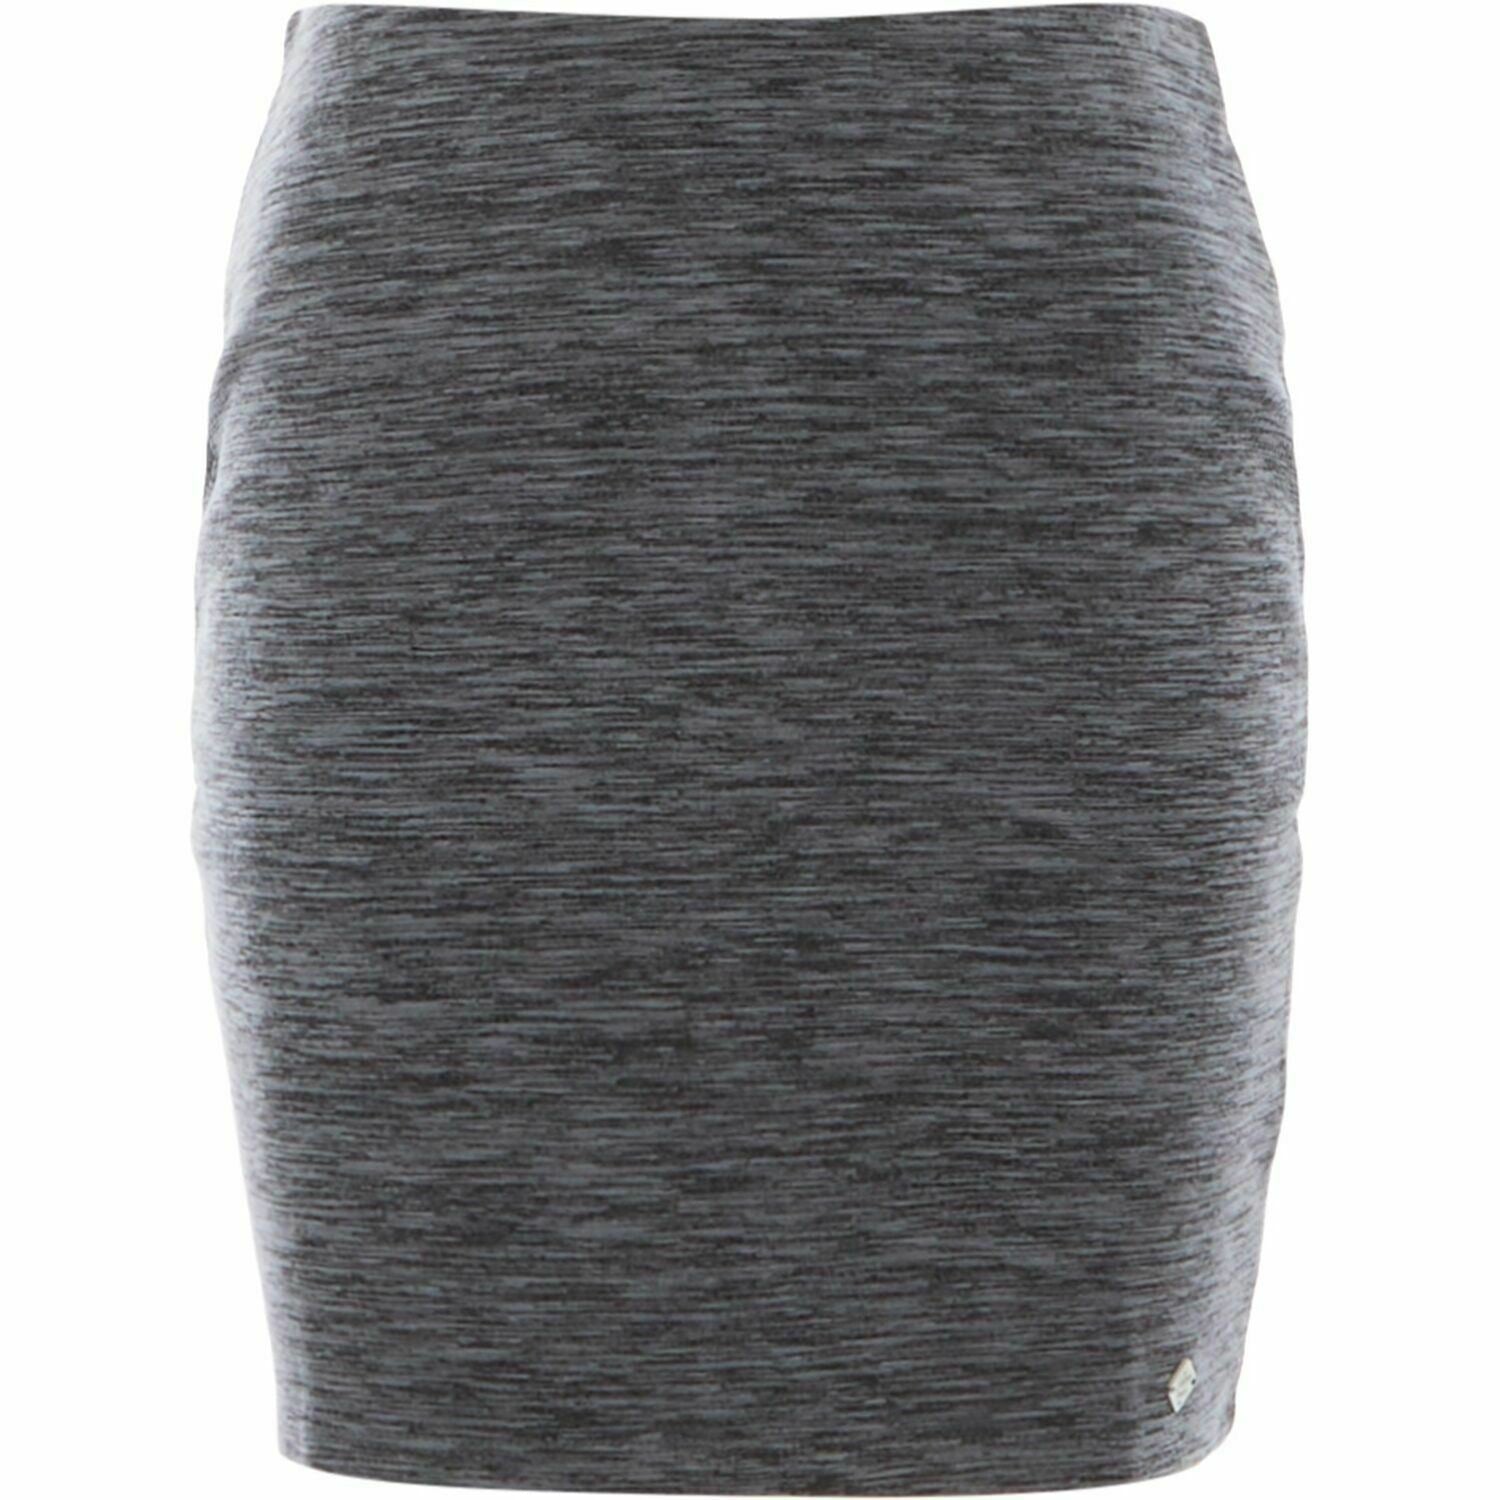 SUPERDRY Women's EDISON Mini Skirt, Charcoal Twist, size S / UK 10